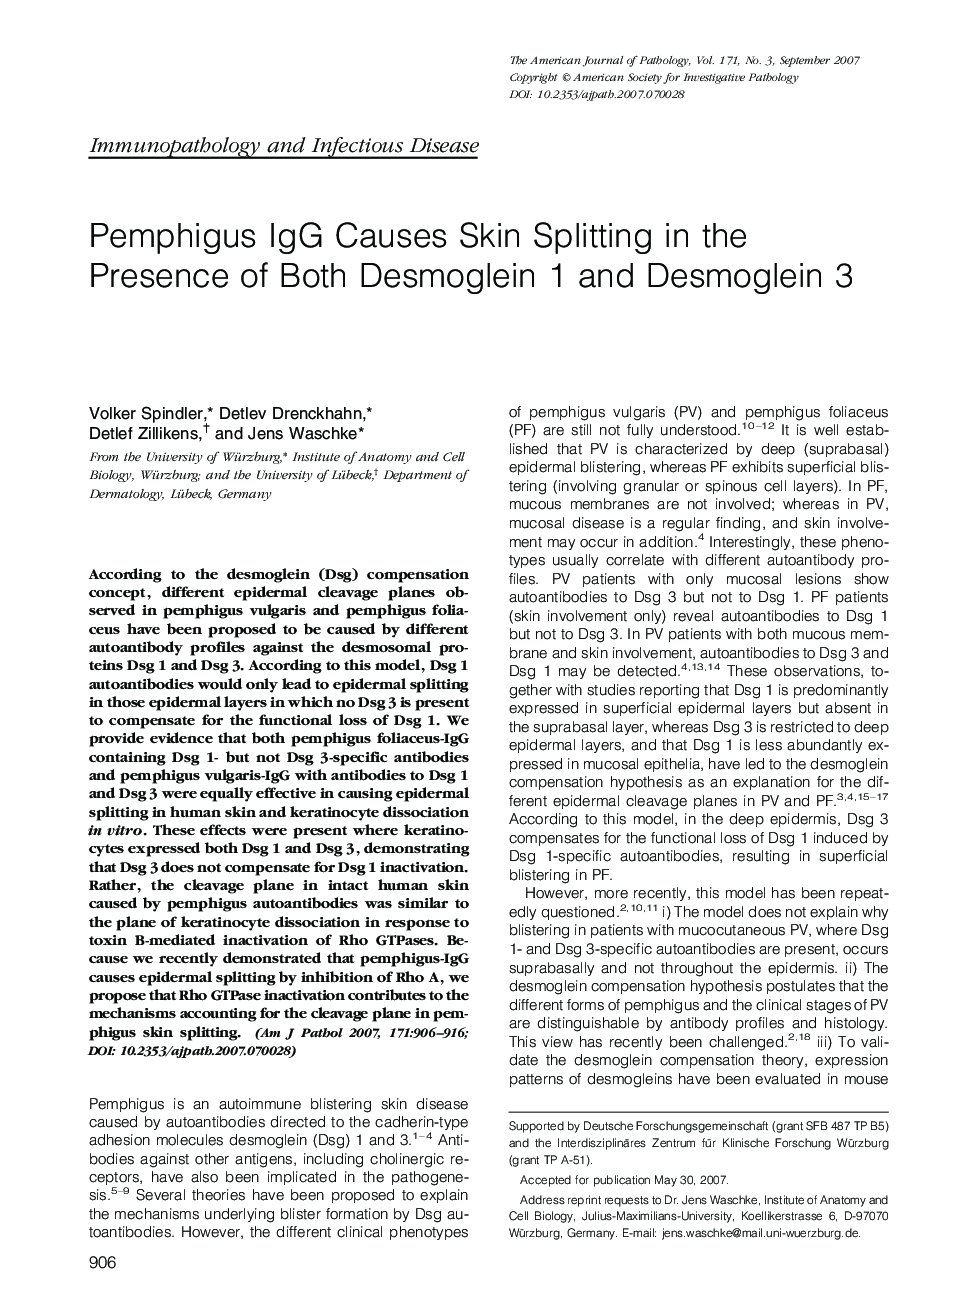 Pemphigus IgG Causes Skin Splitting in the Presence of Both Desmoglein 1 and Desmoglein 3